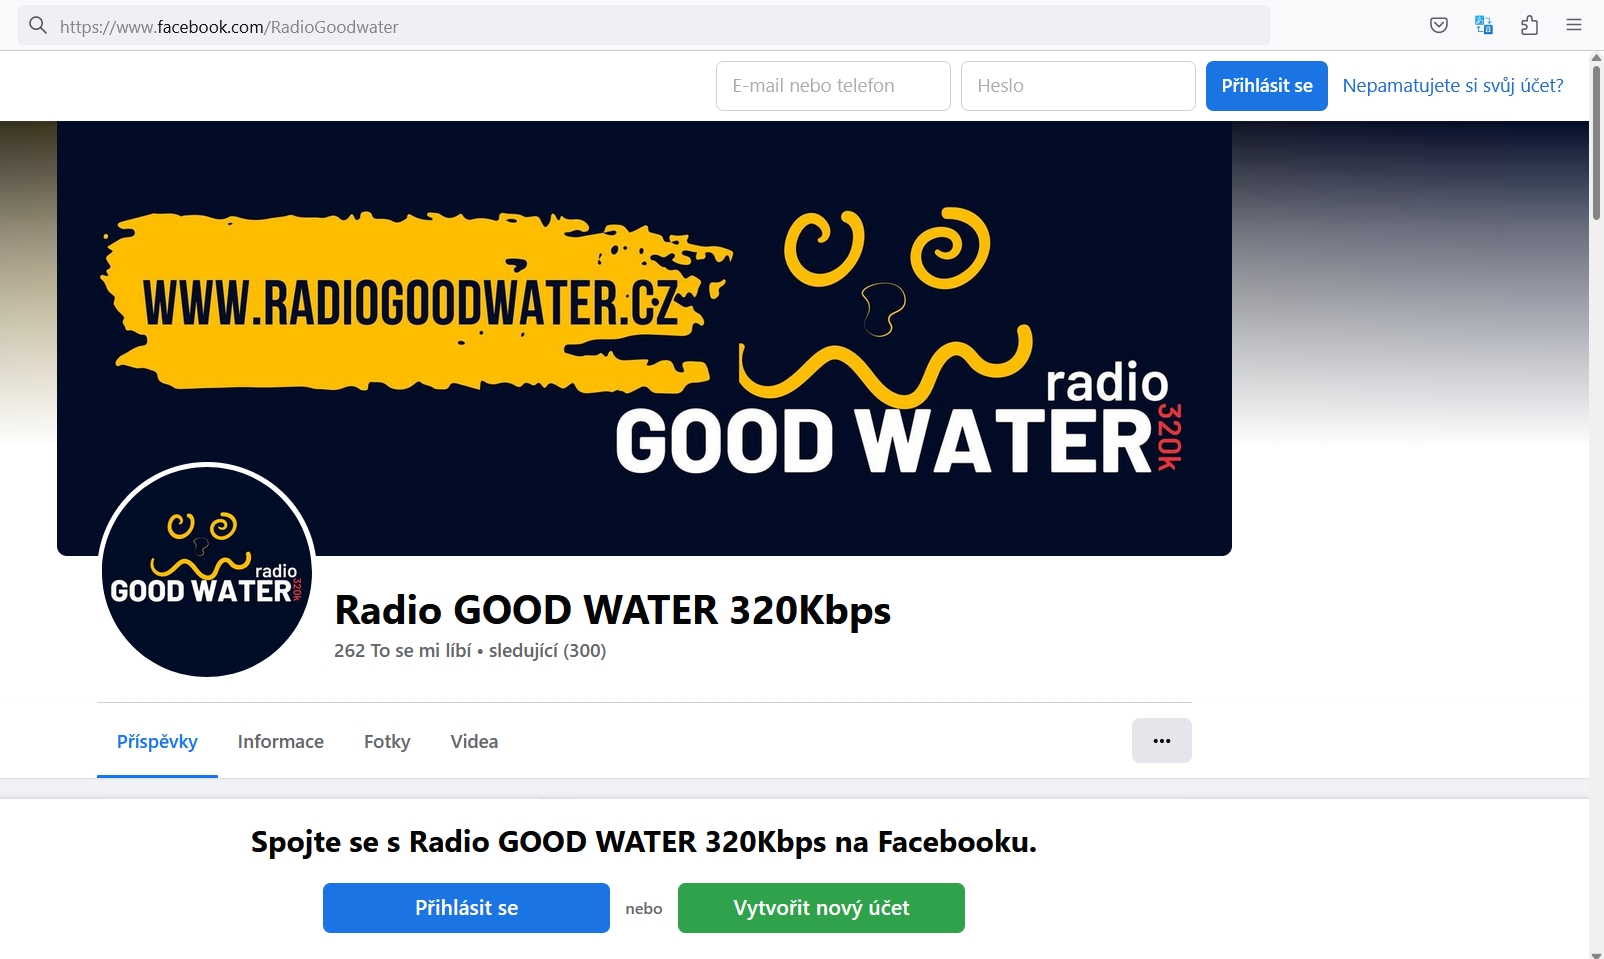 Facebook radia Good water post thumbnail image